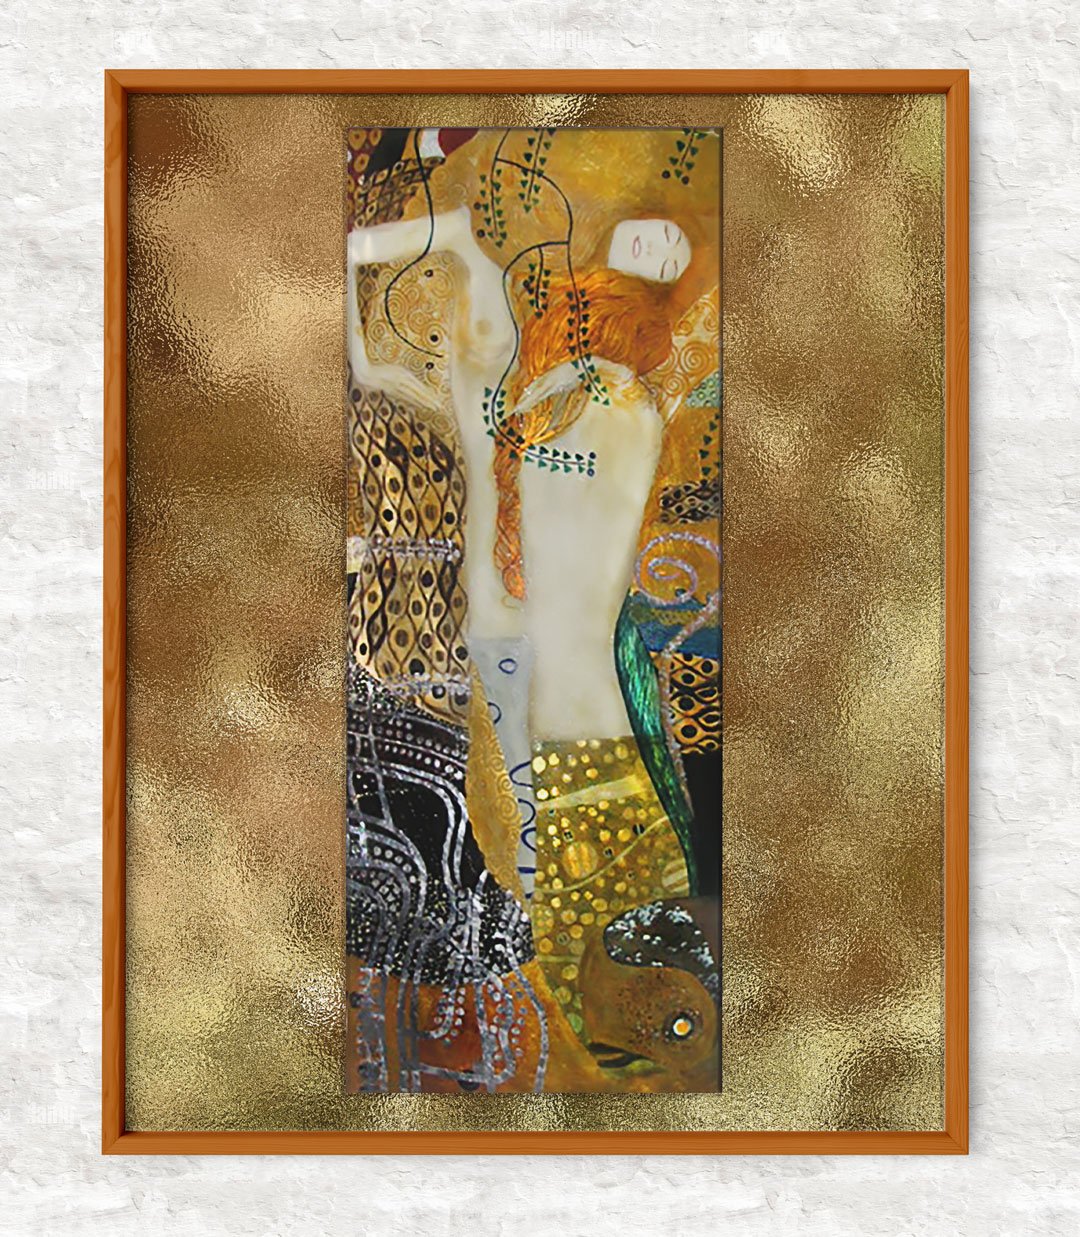 After Gustav Klimt's "Mermaids," (2003)